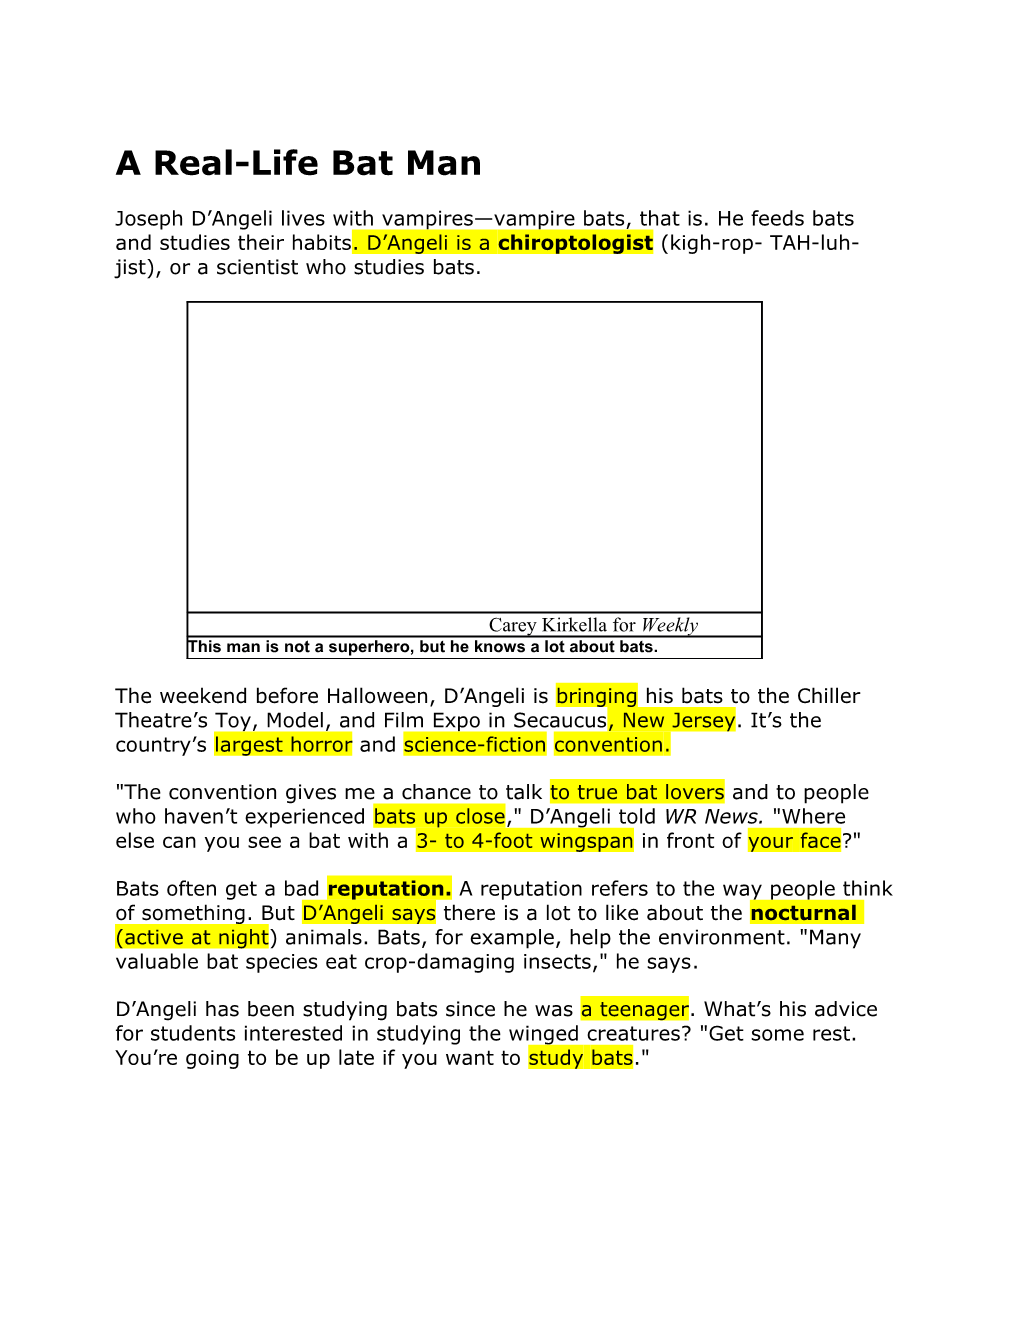 A Real Life Bat Man Passage